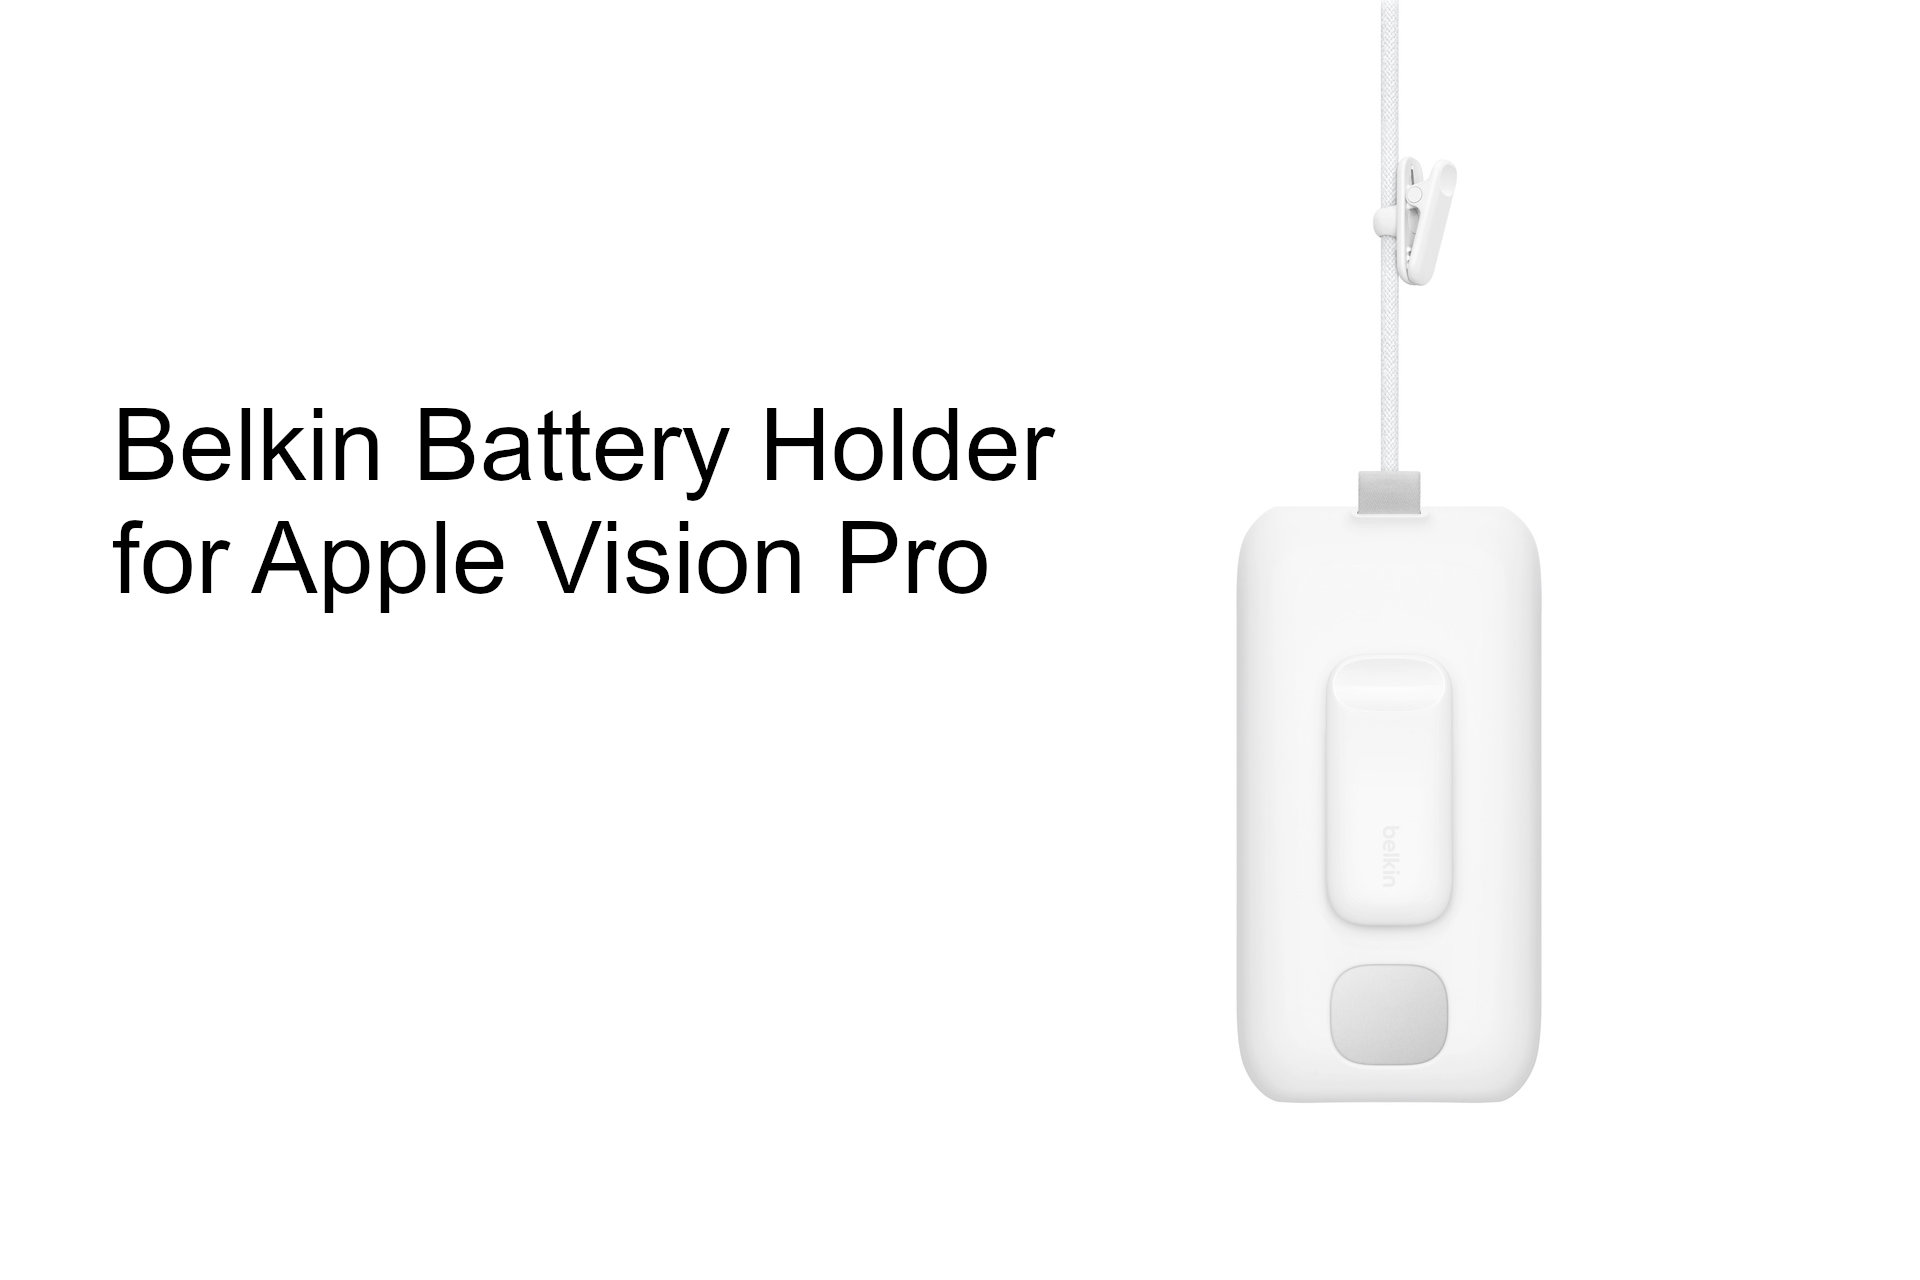 Belkin's Battery Holder for Apple Vision Pro.